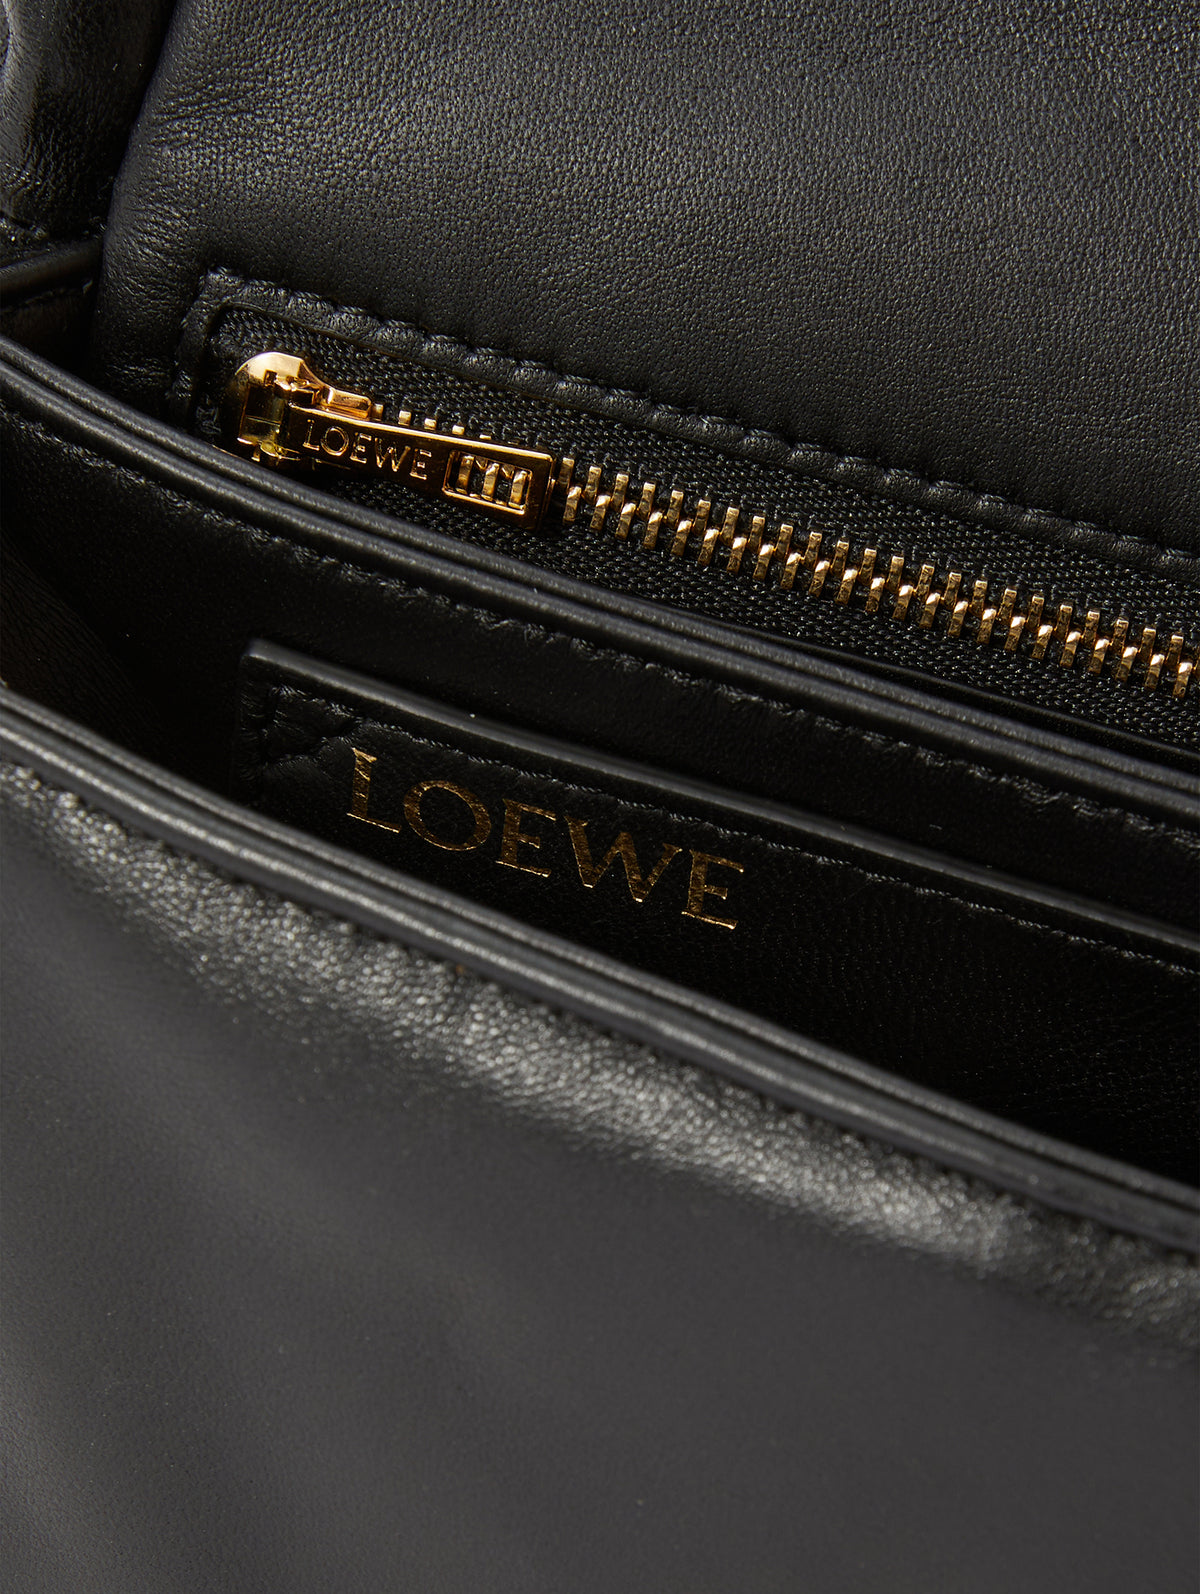 LOEWE Goya leather shoulder bag  Bags, Leather shoulder bag, Loewe bag